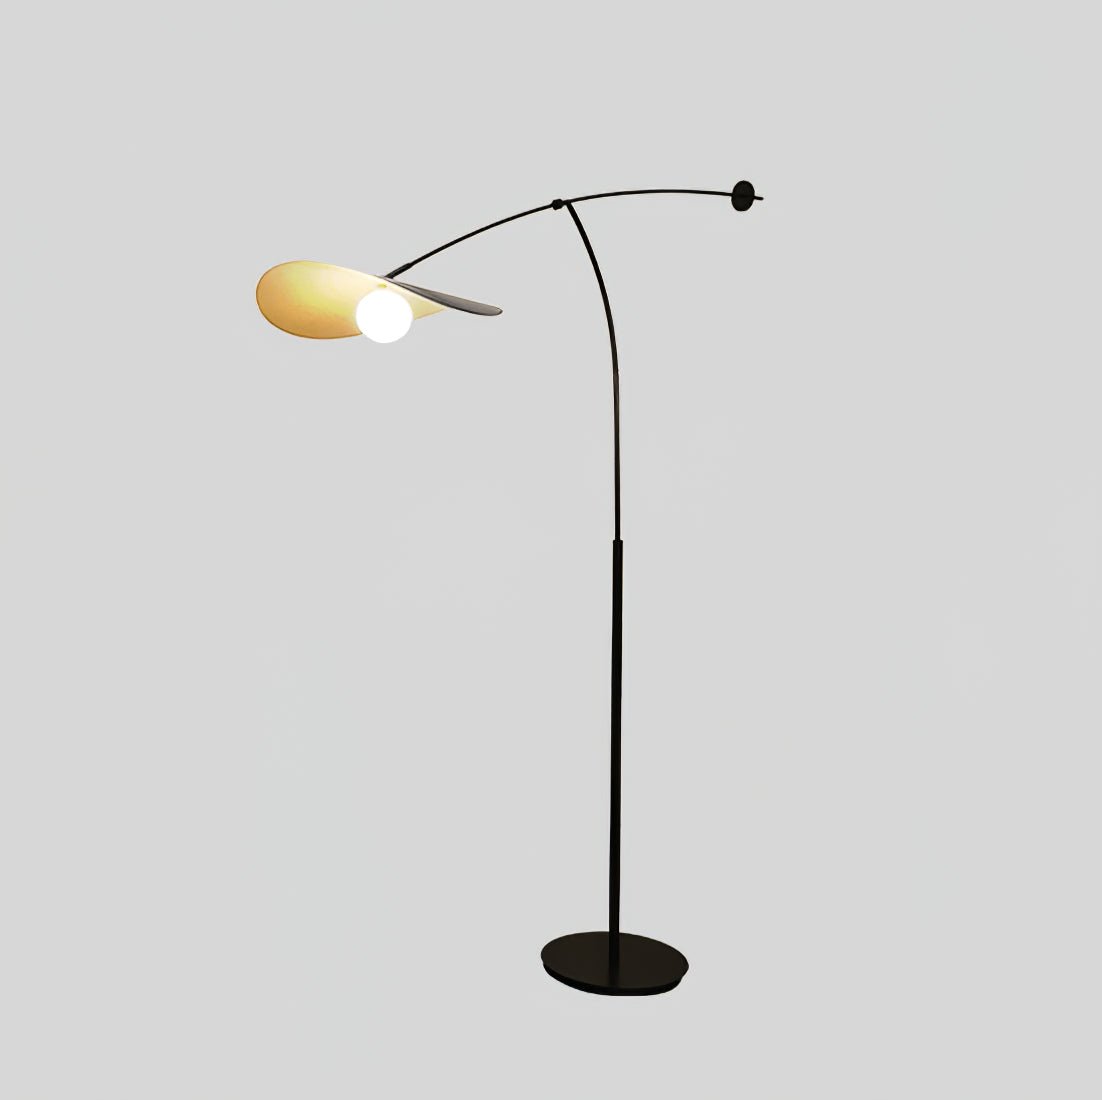 Floor Lamp Alonso, Dimensions: Width 47.2" x Height 62.9" (120cm x 160cm), Color: Black/Gold, Includes EU Plug.